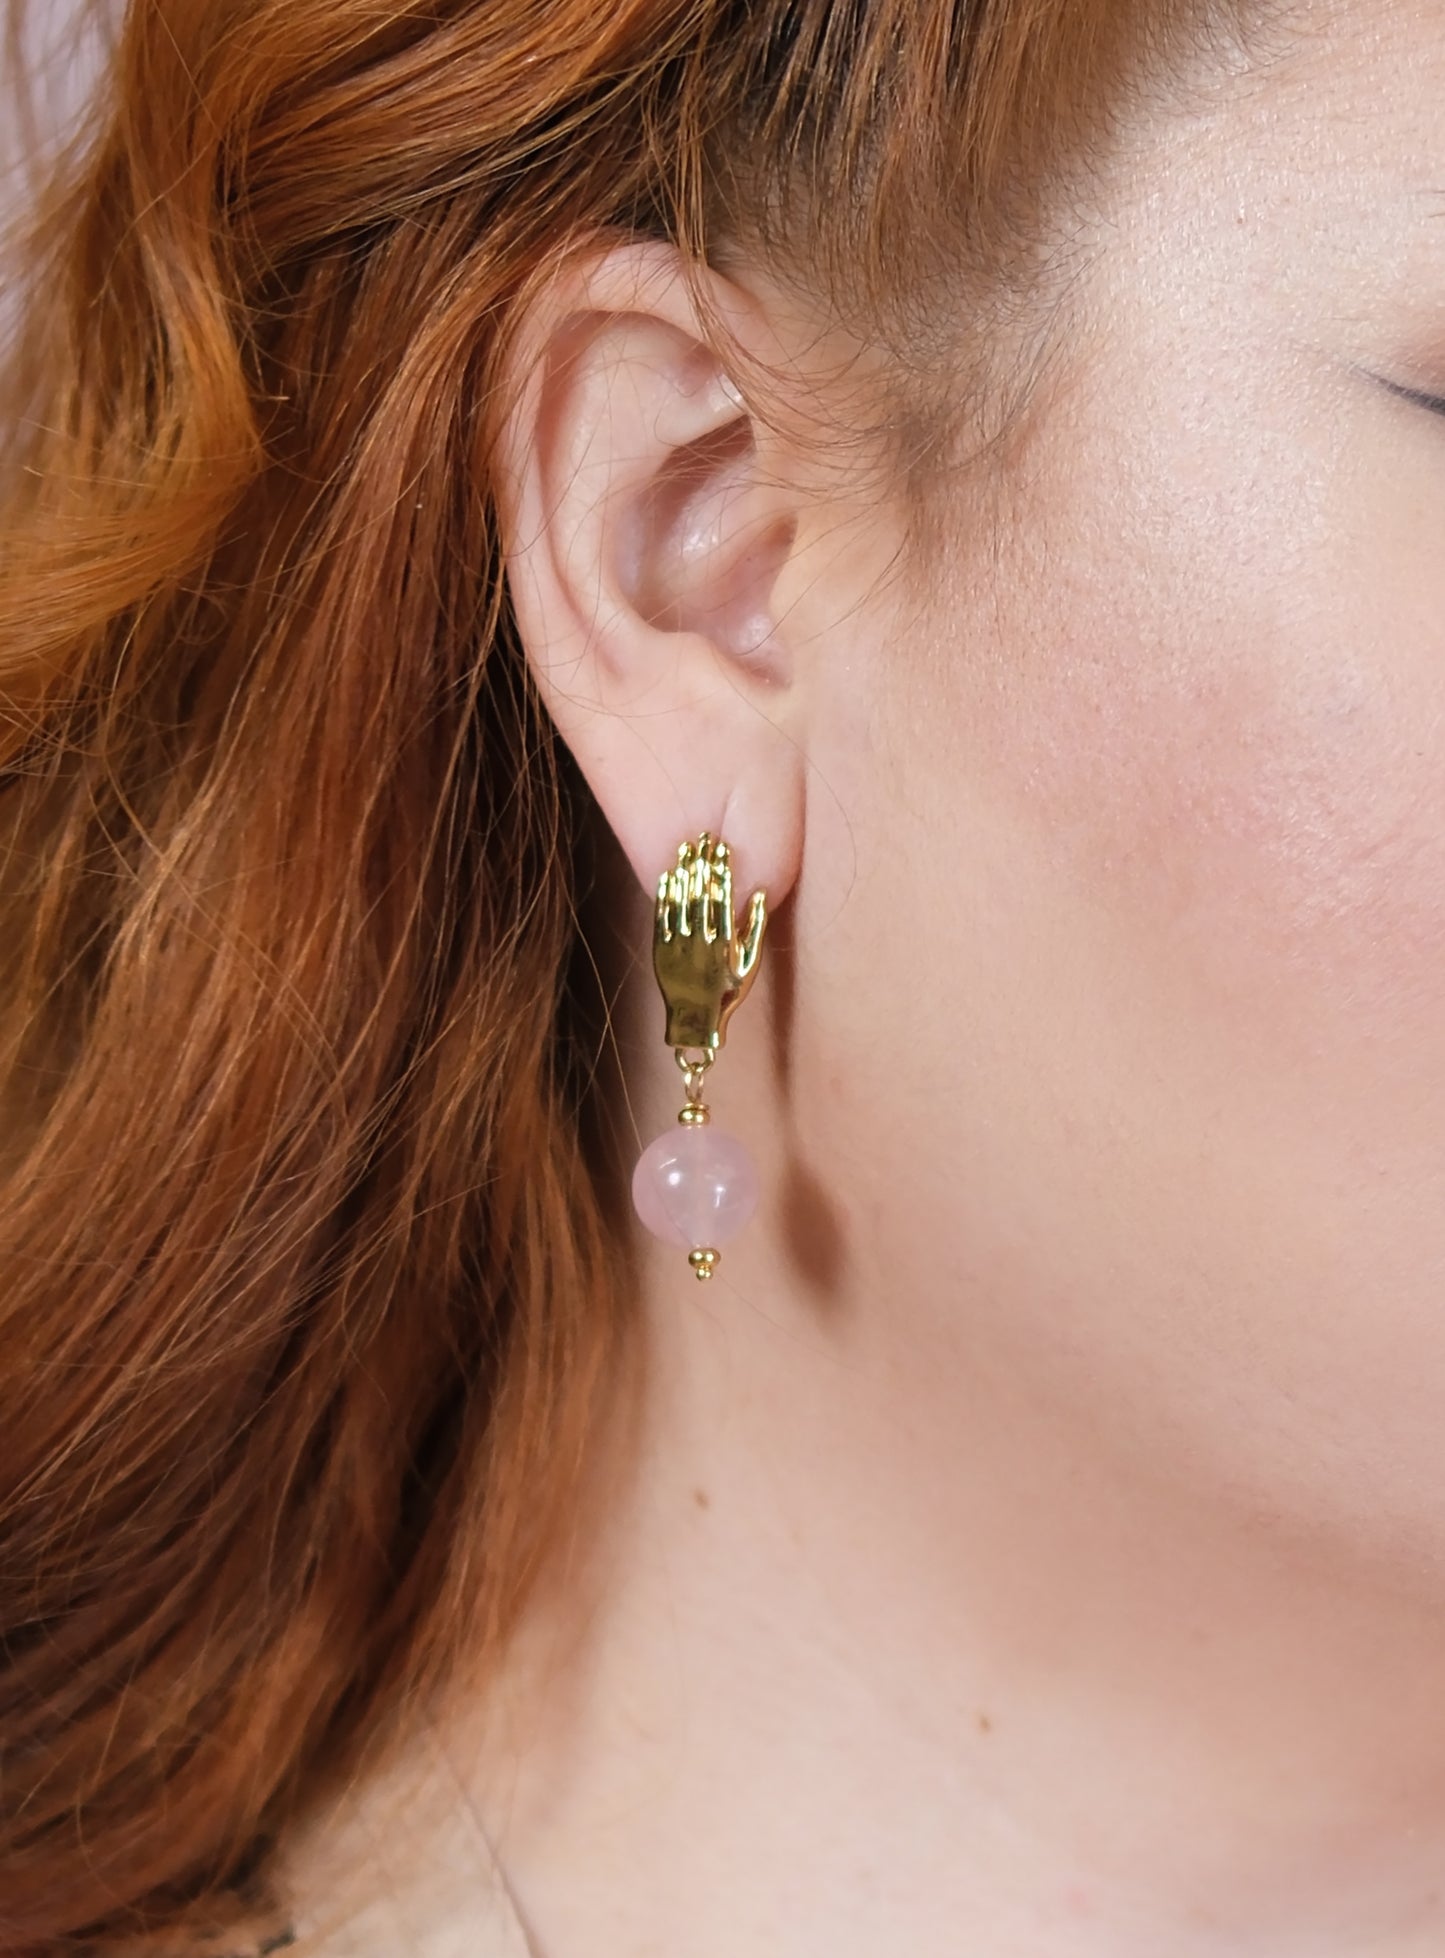 Aphrodite Earrings (Rose Quartz)